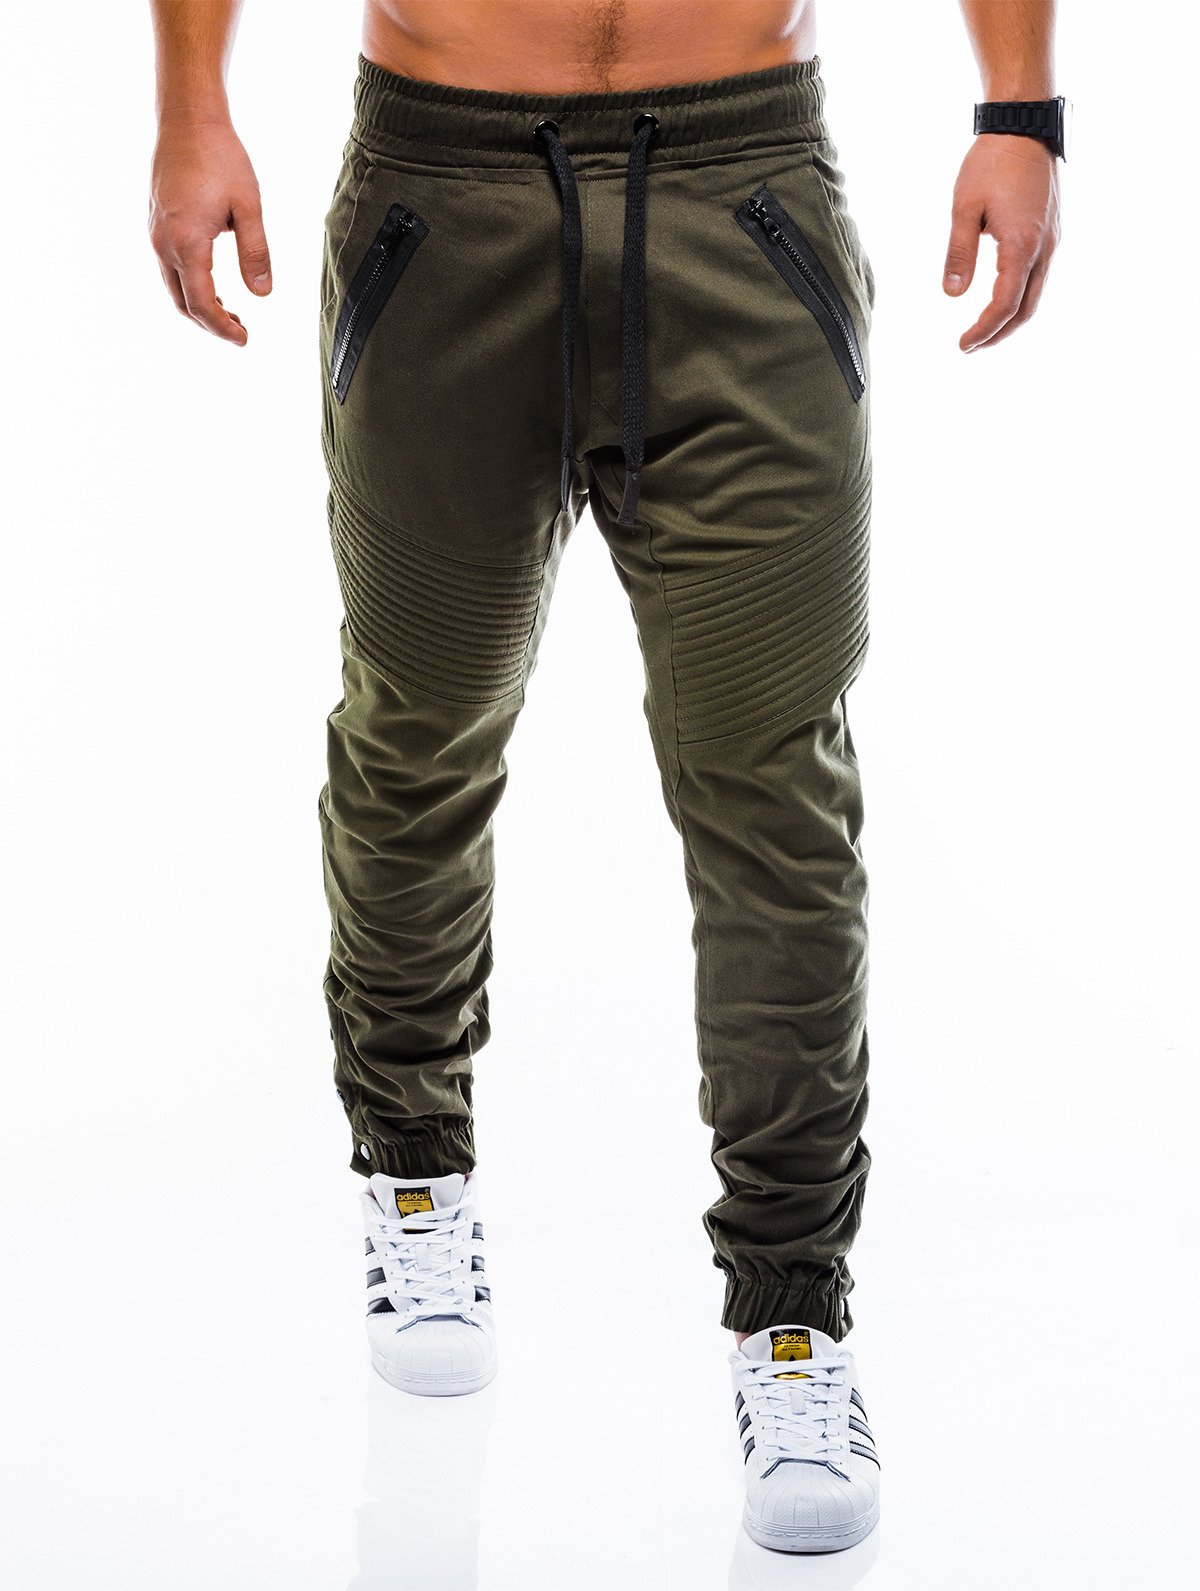 Men's pants joggers P815 - khaki | MODONE wholesale - Clothing For Men